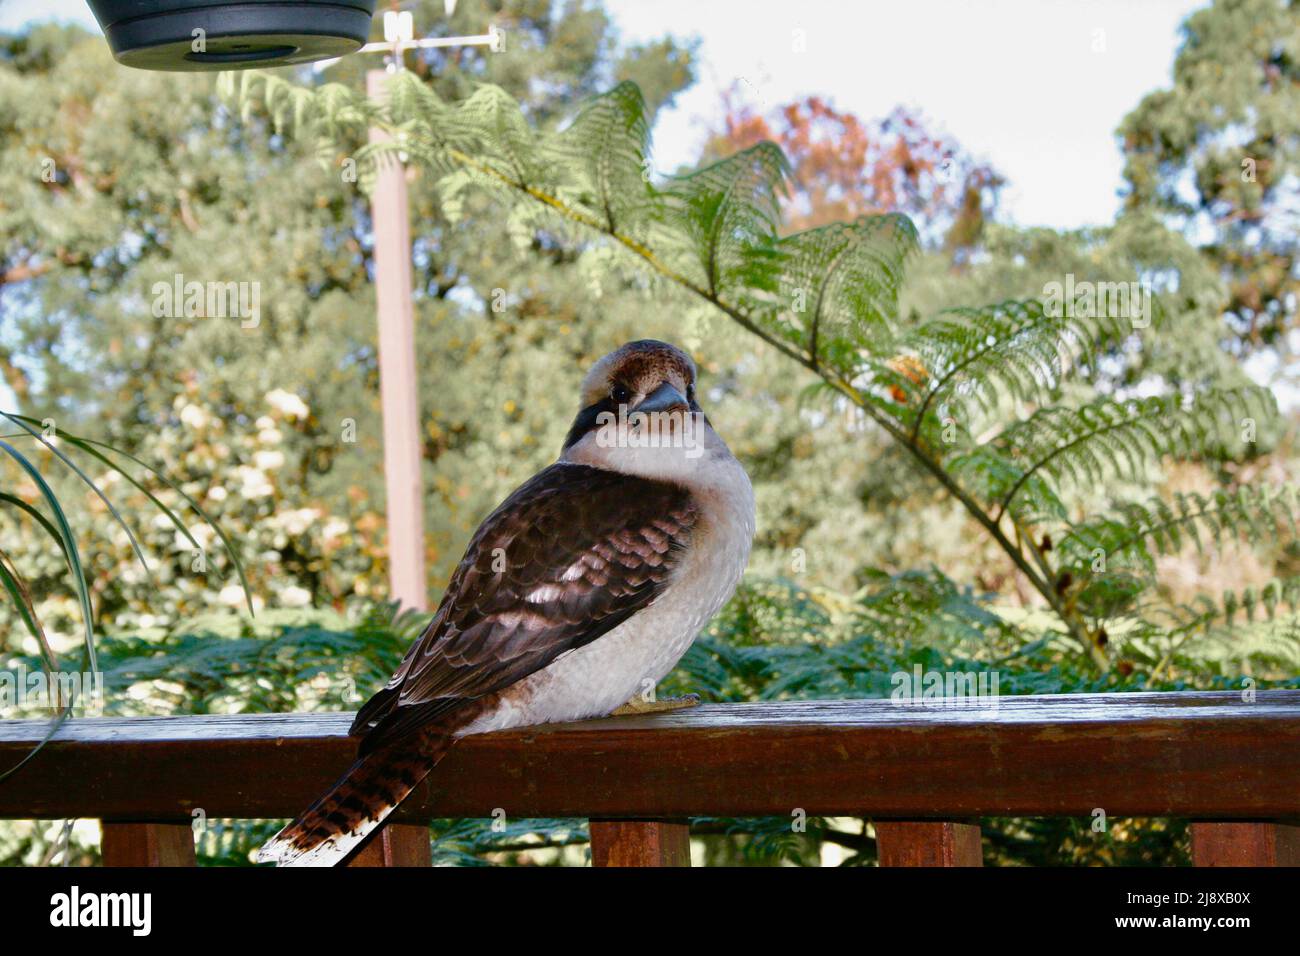 Kookaburra on railing Stock Photo